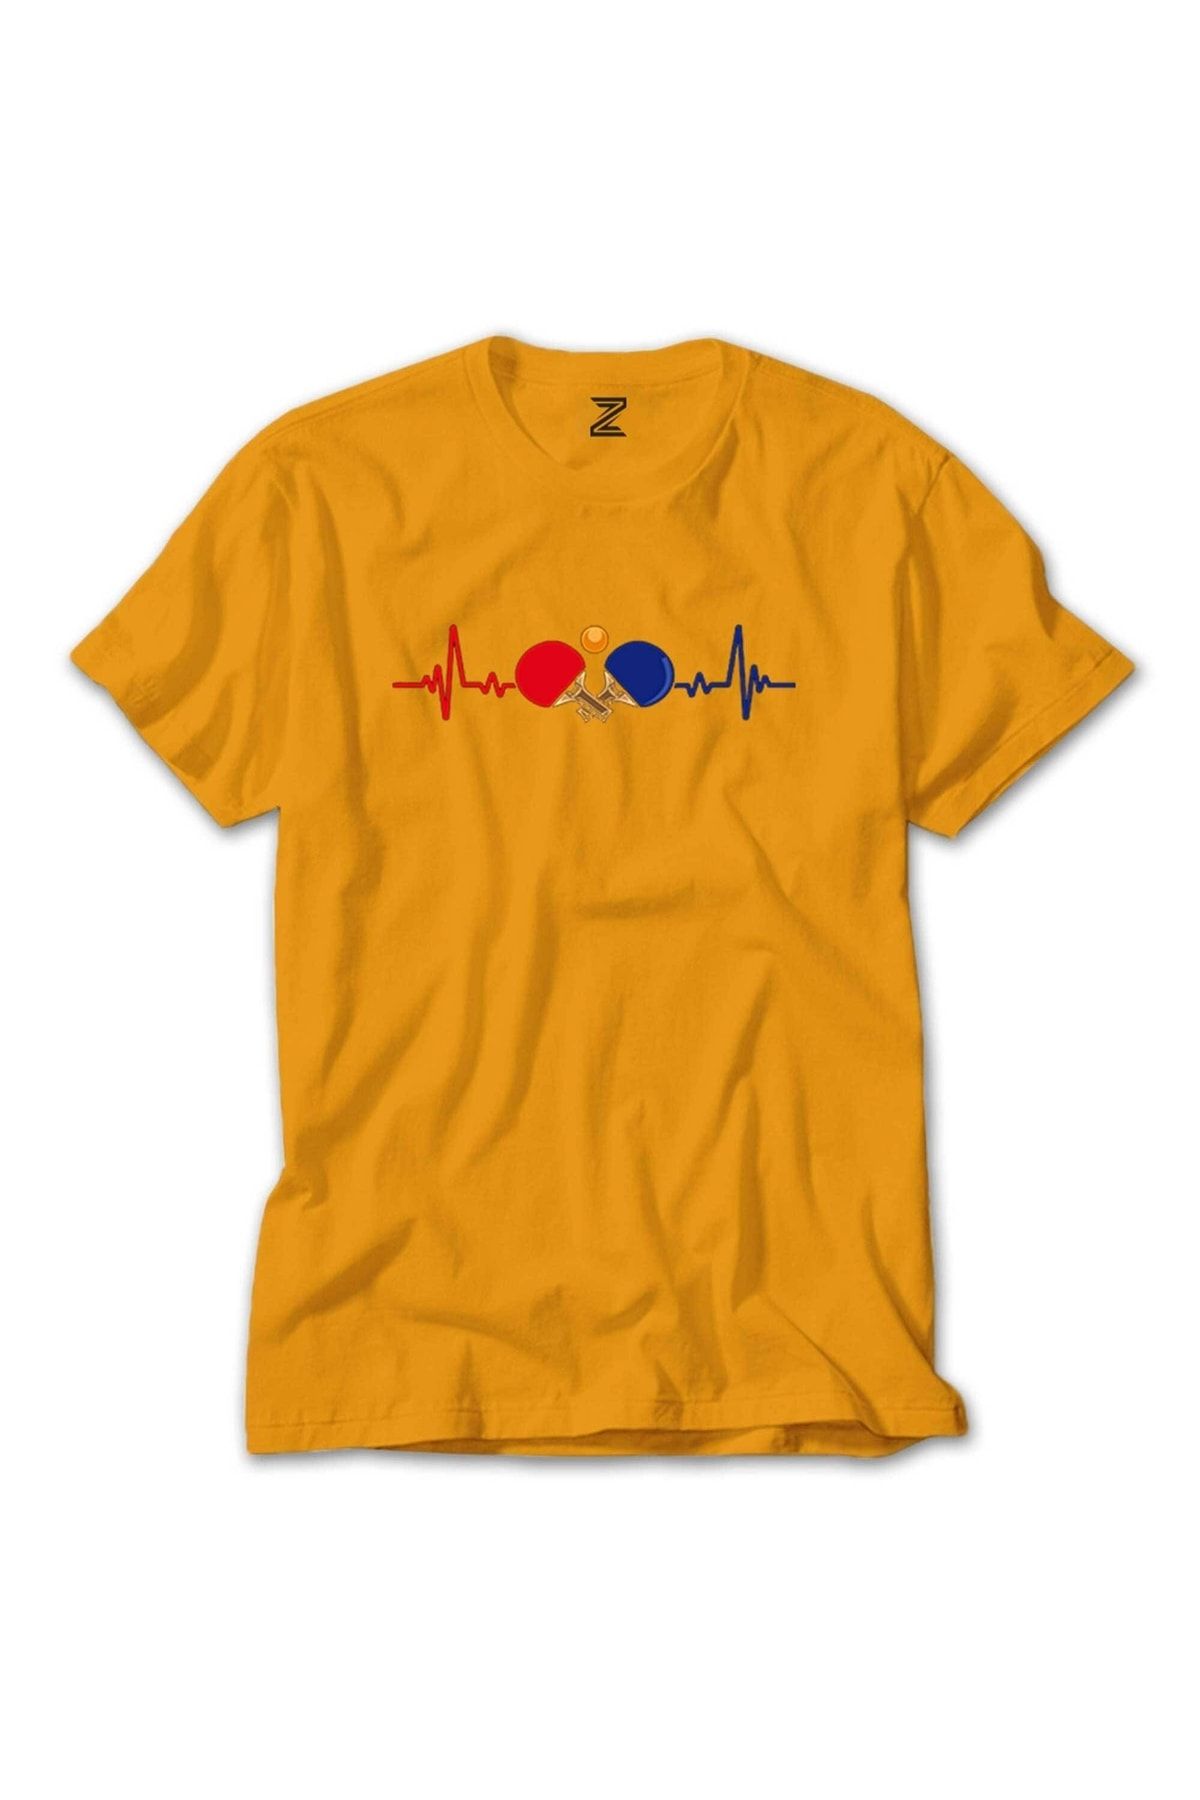 Z zepplin Ping Pong Heartbeat Sarı Tişört